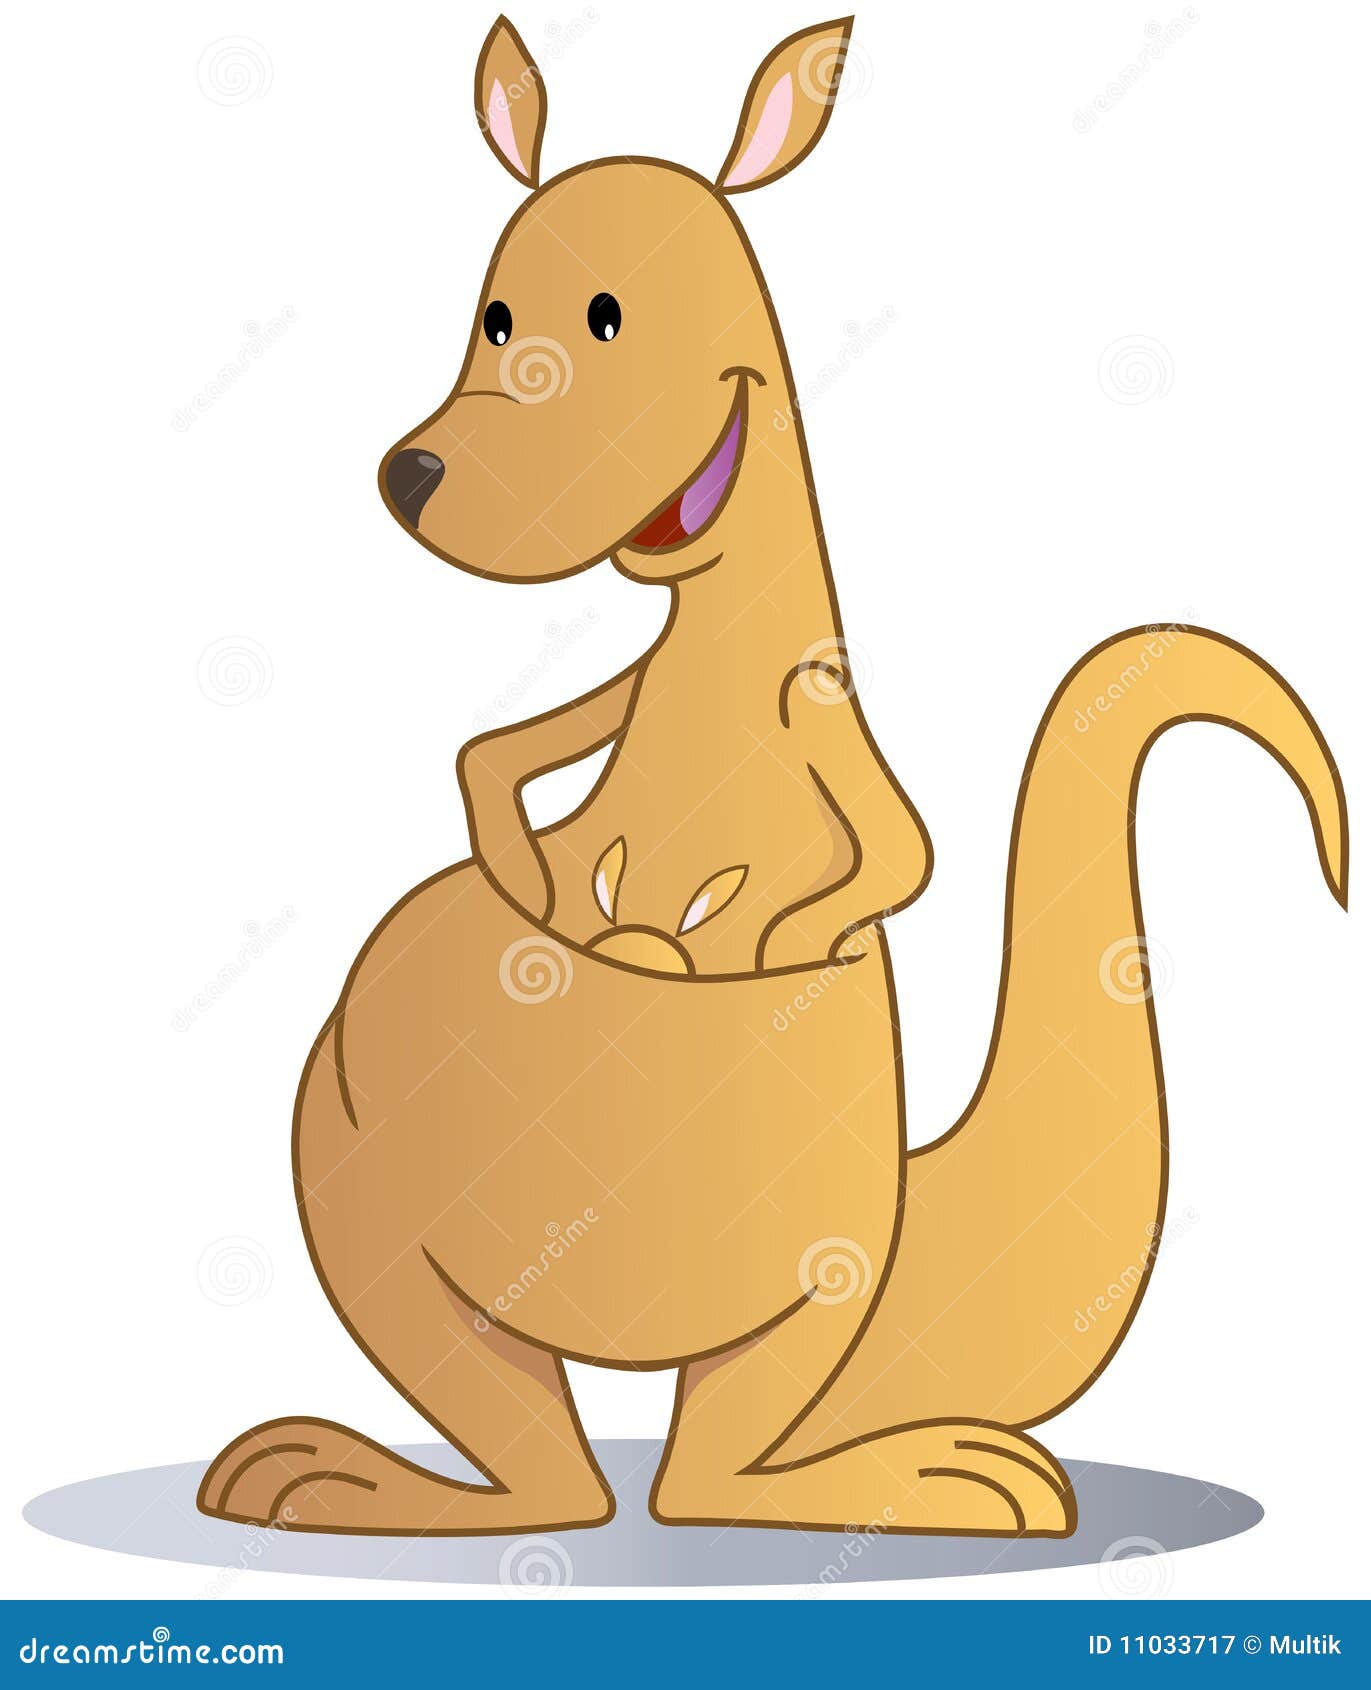 clipart kangaroo cartoon - photo #44